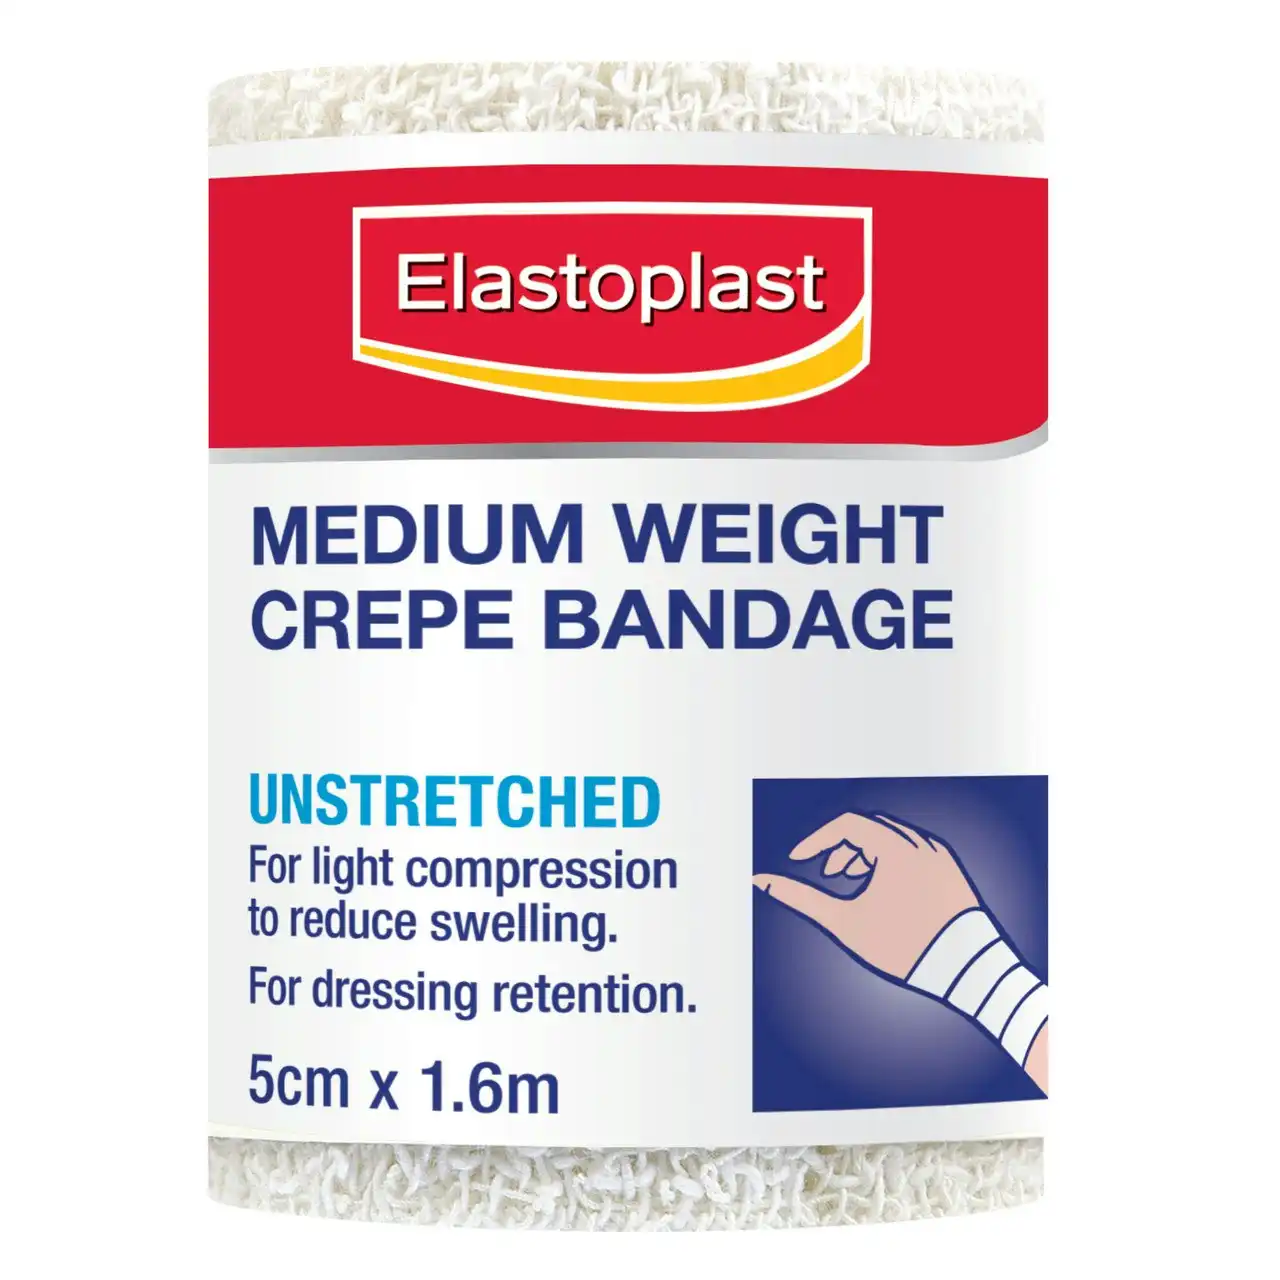 Elastoplast Mw Crepe Bandage 5cm X 1.6m